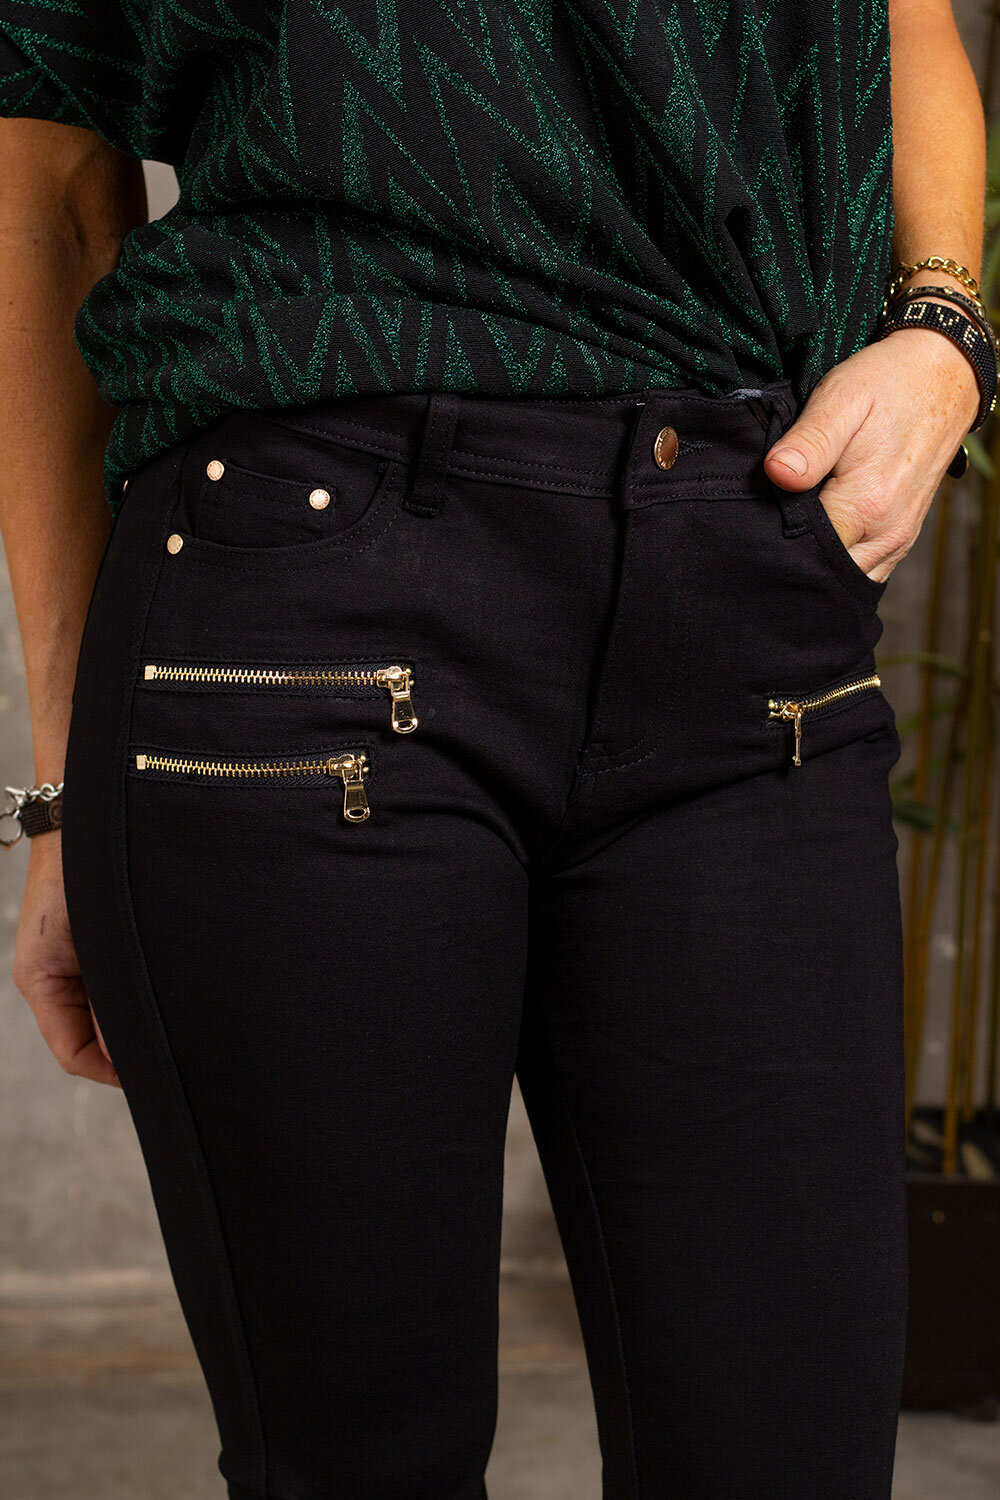 Pants A69/H86 - Zippers - Black